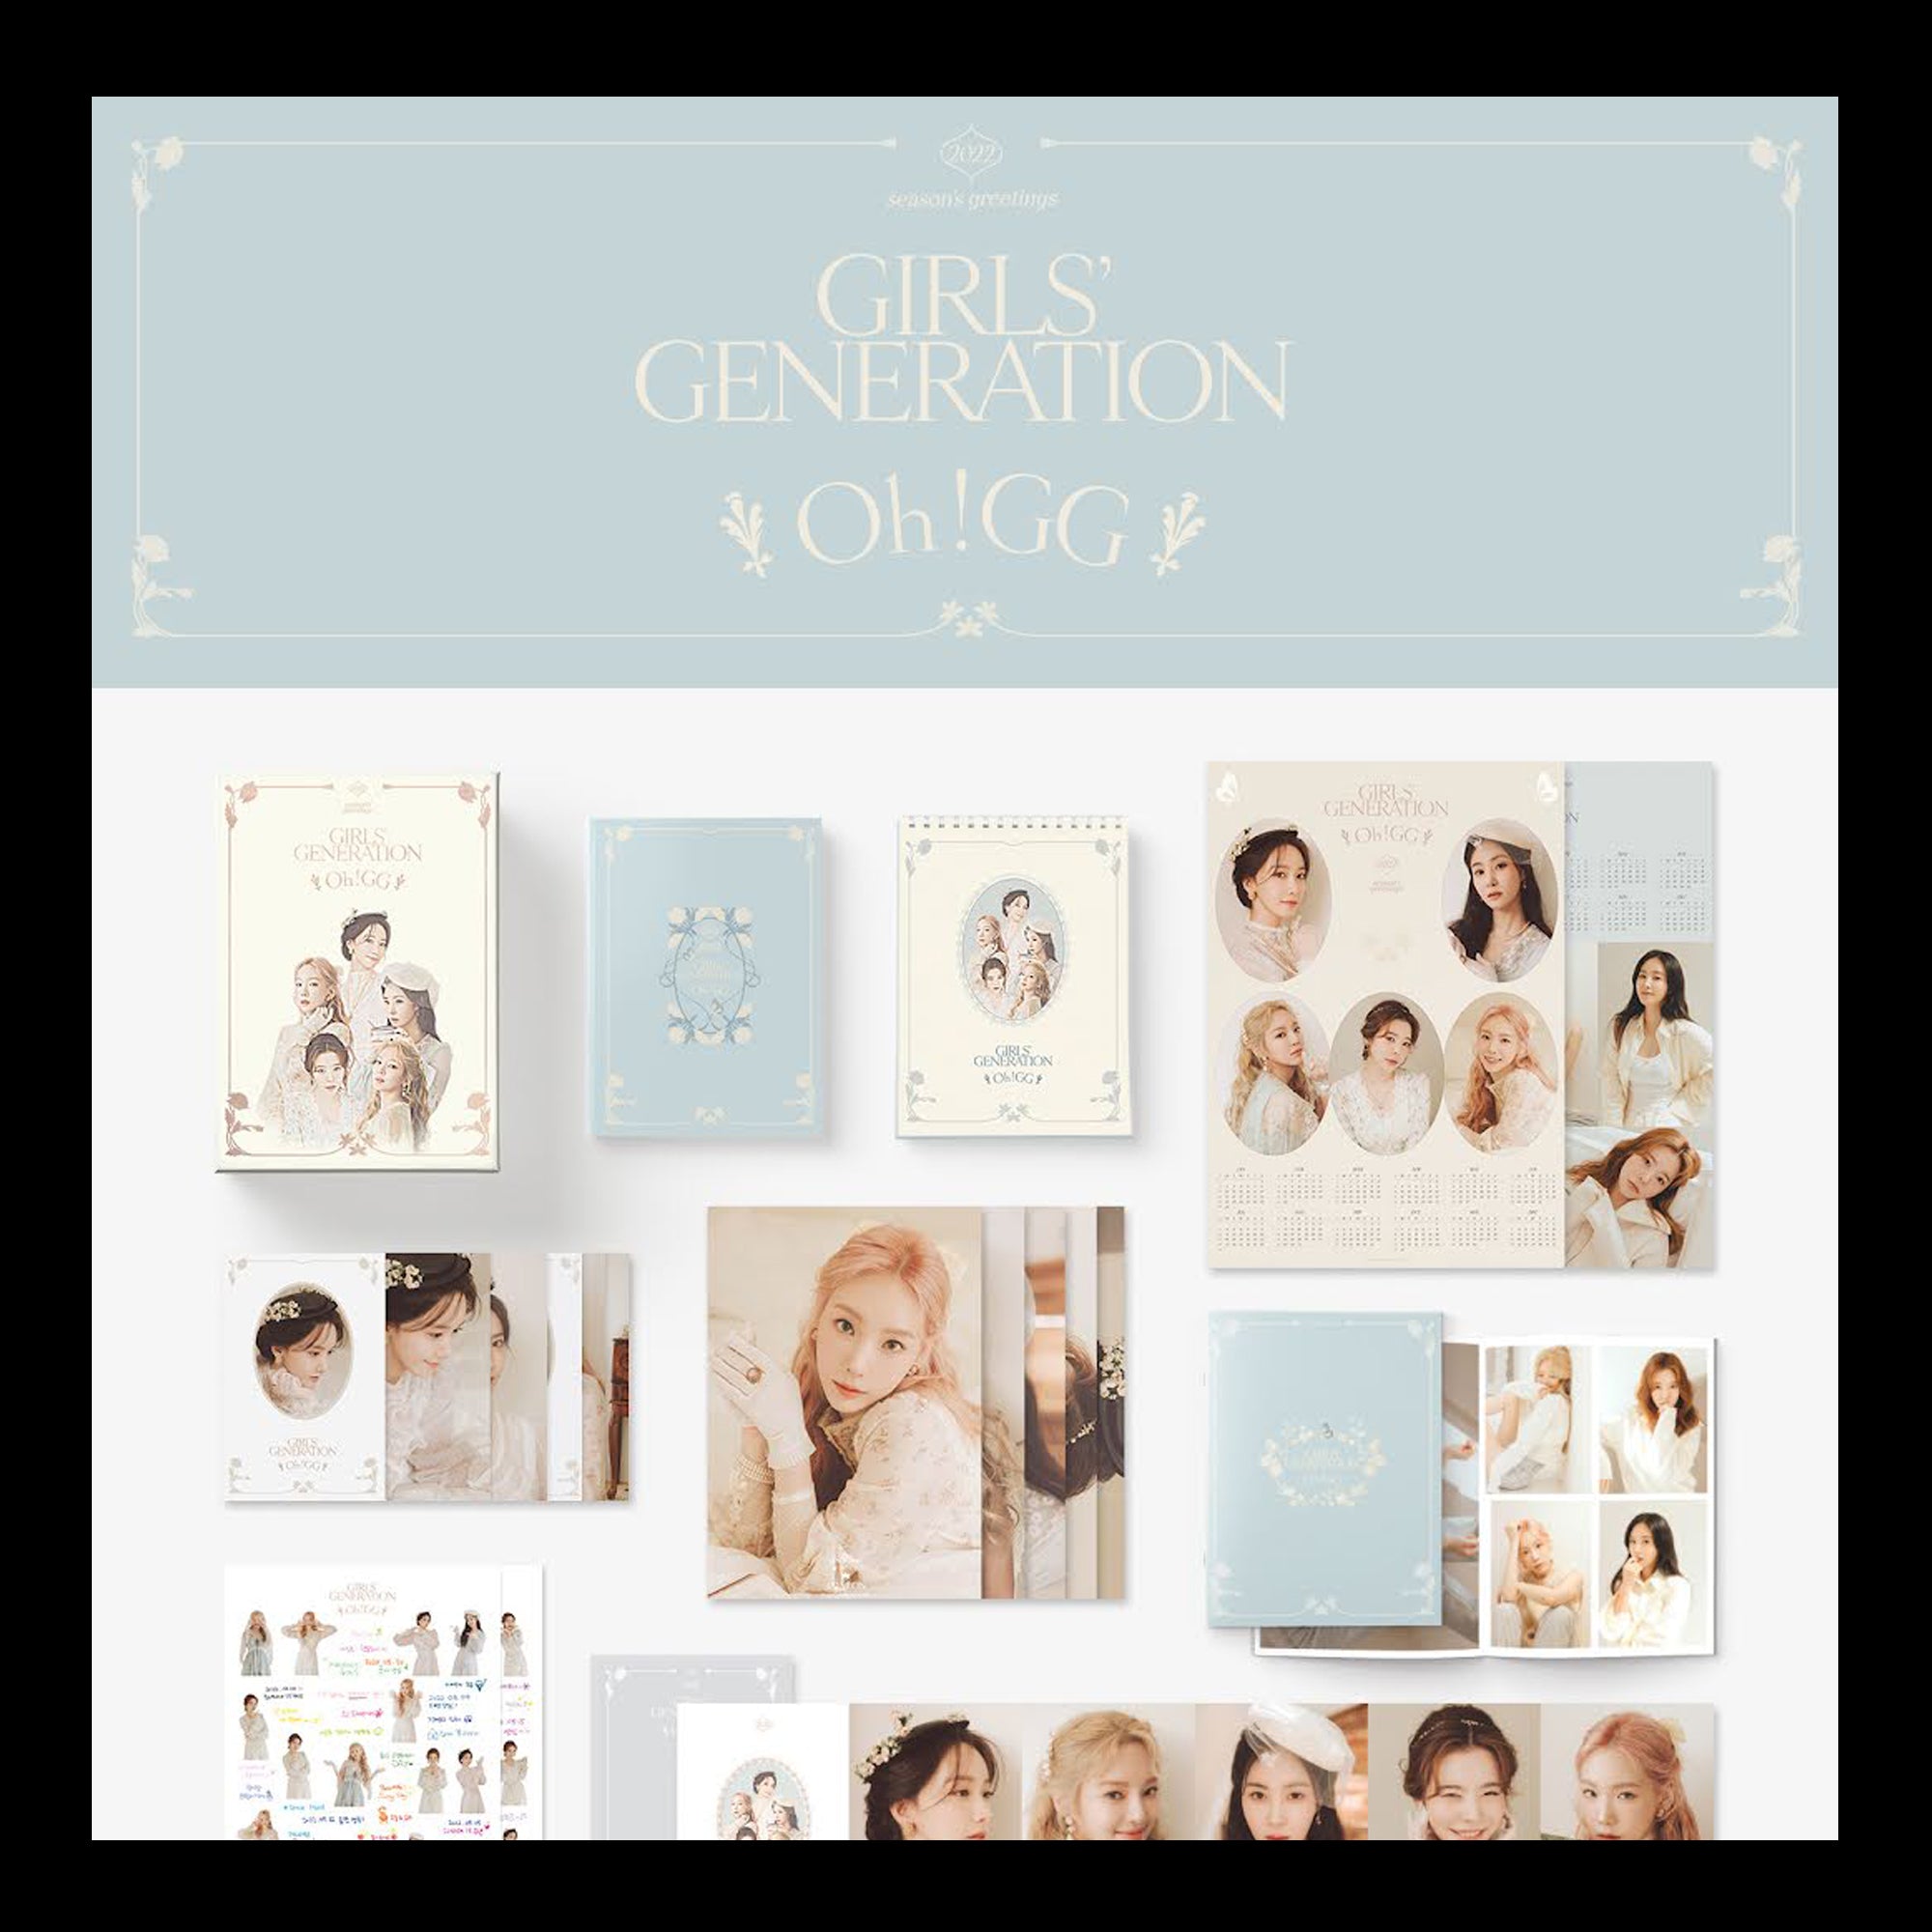 Girls' Generation: OH! GG - SEASON'S GREETINGS 2022